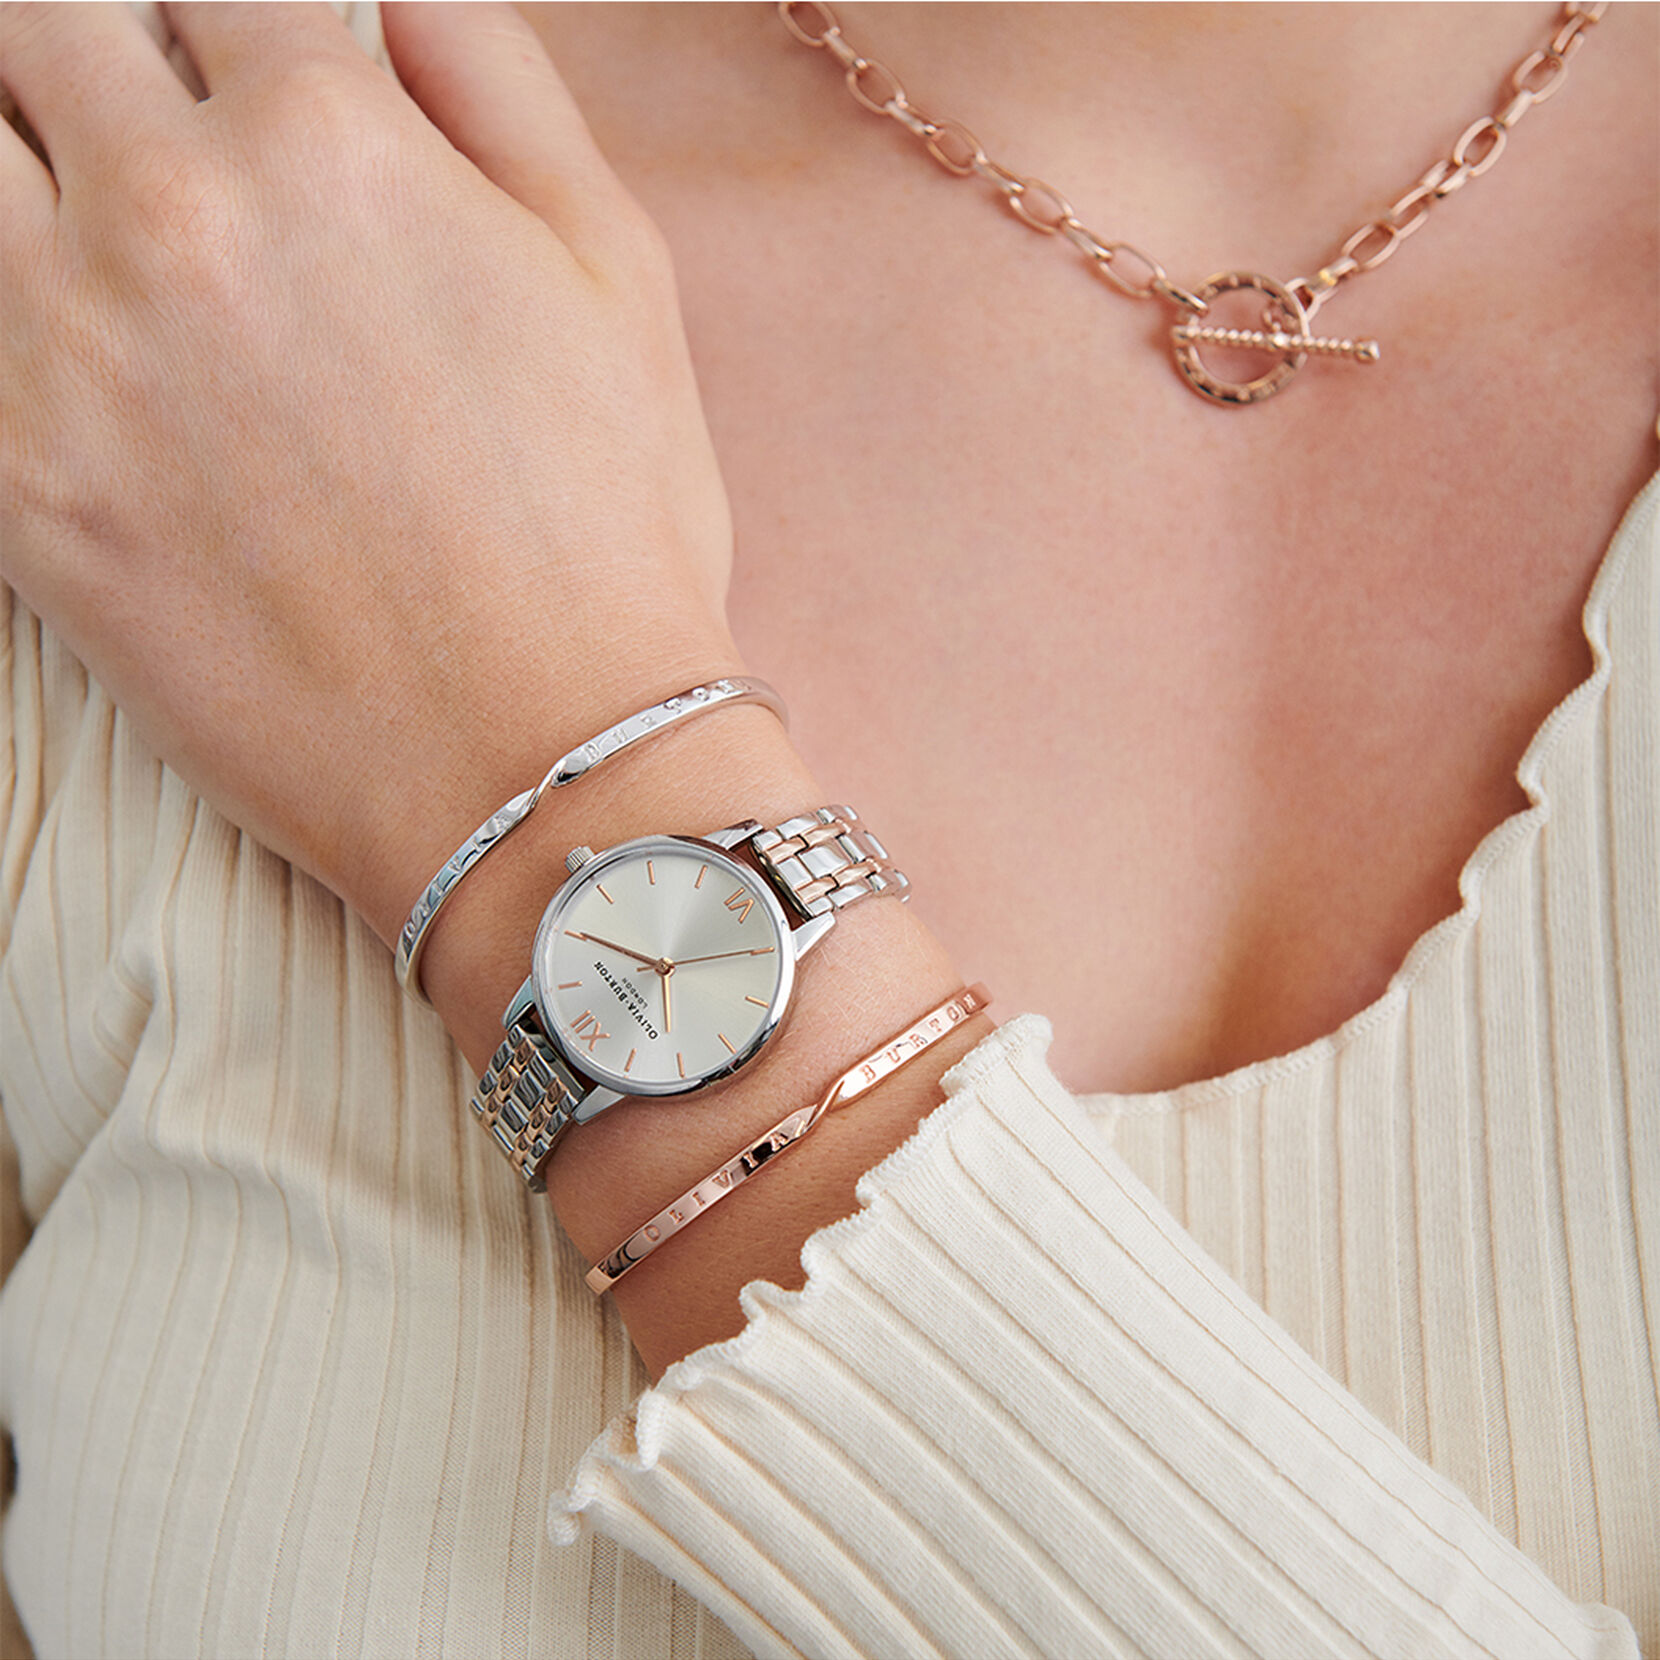 30mm Silver & Carnation Gold Bracelet Watch